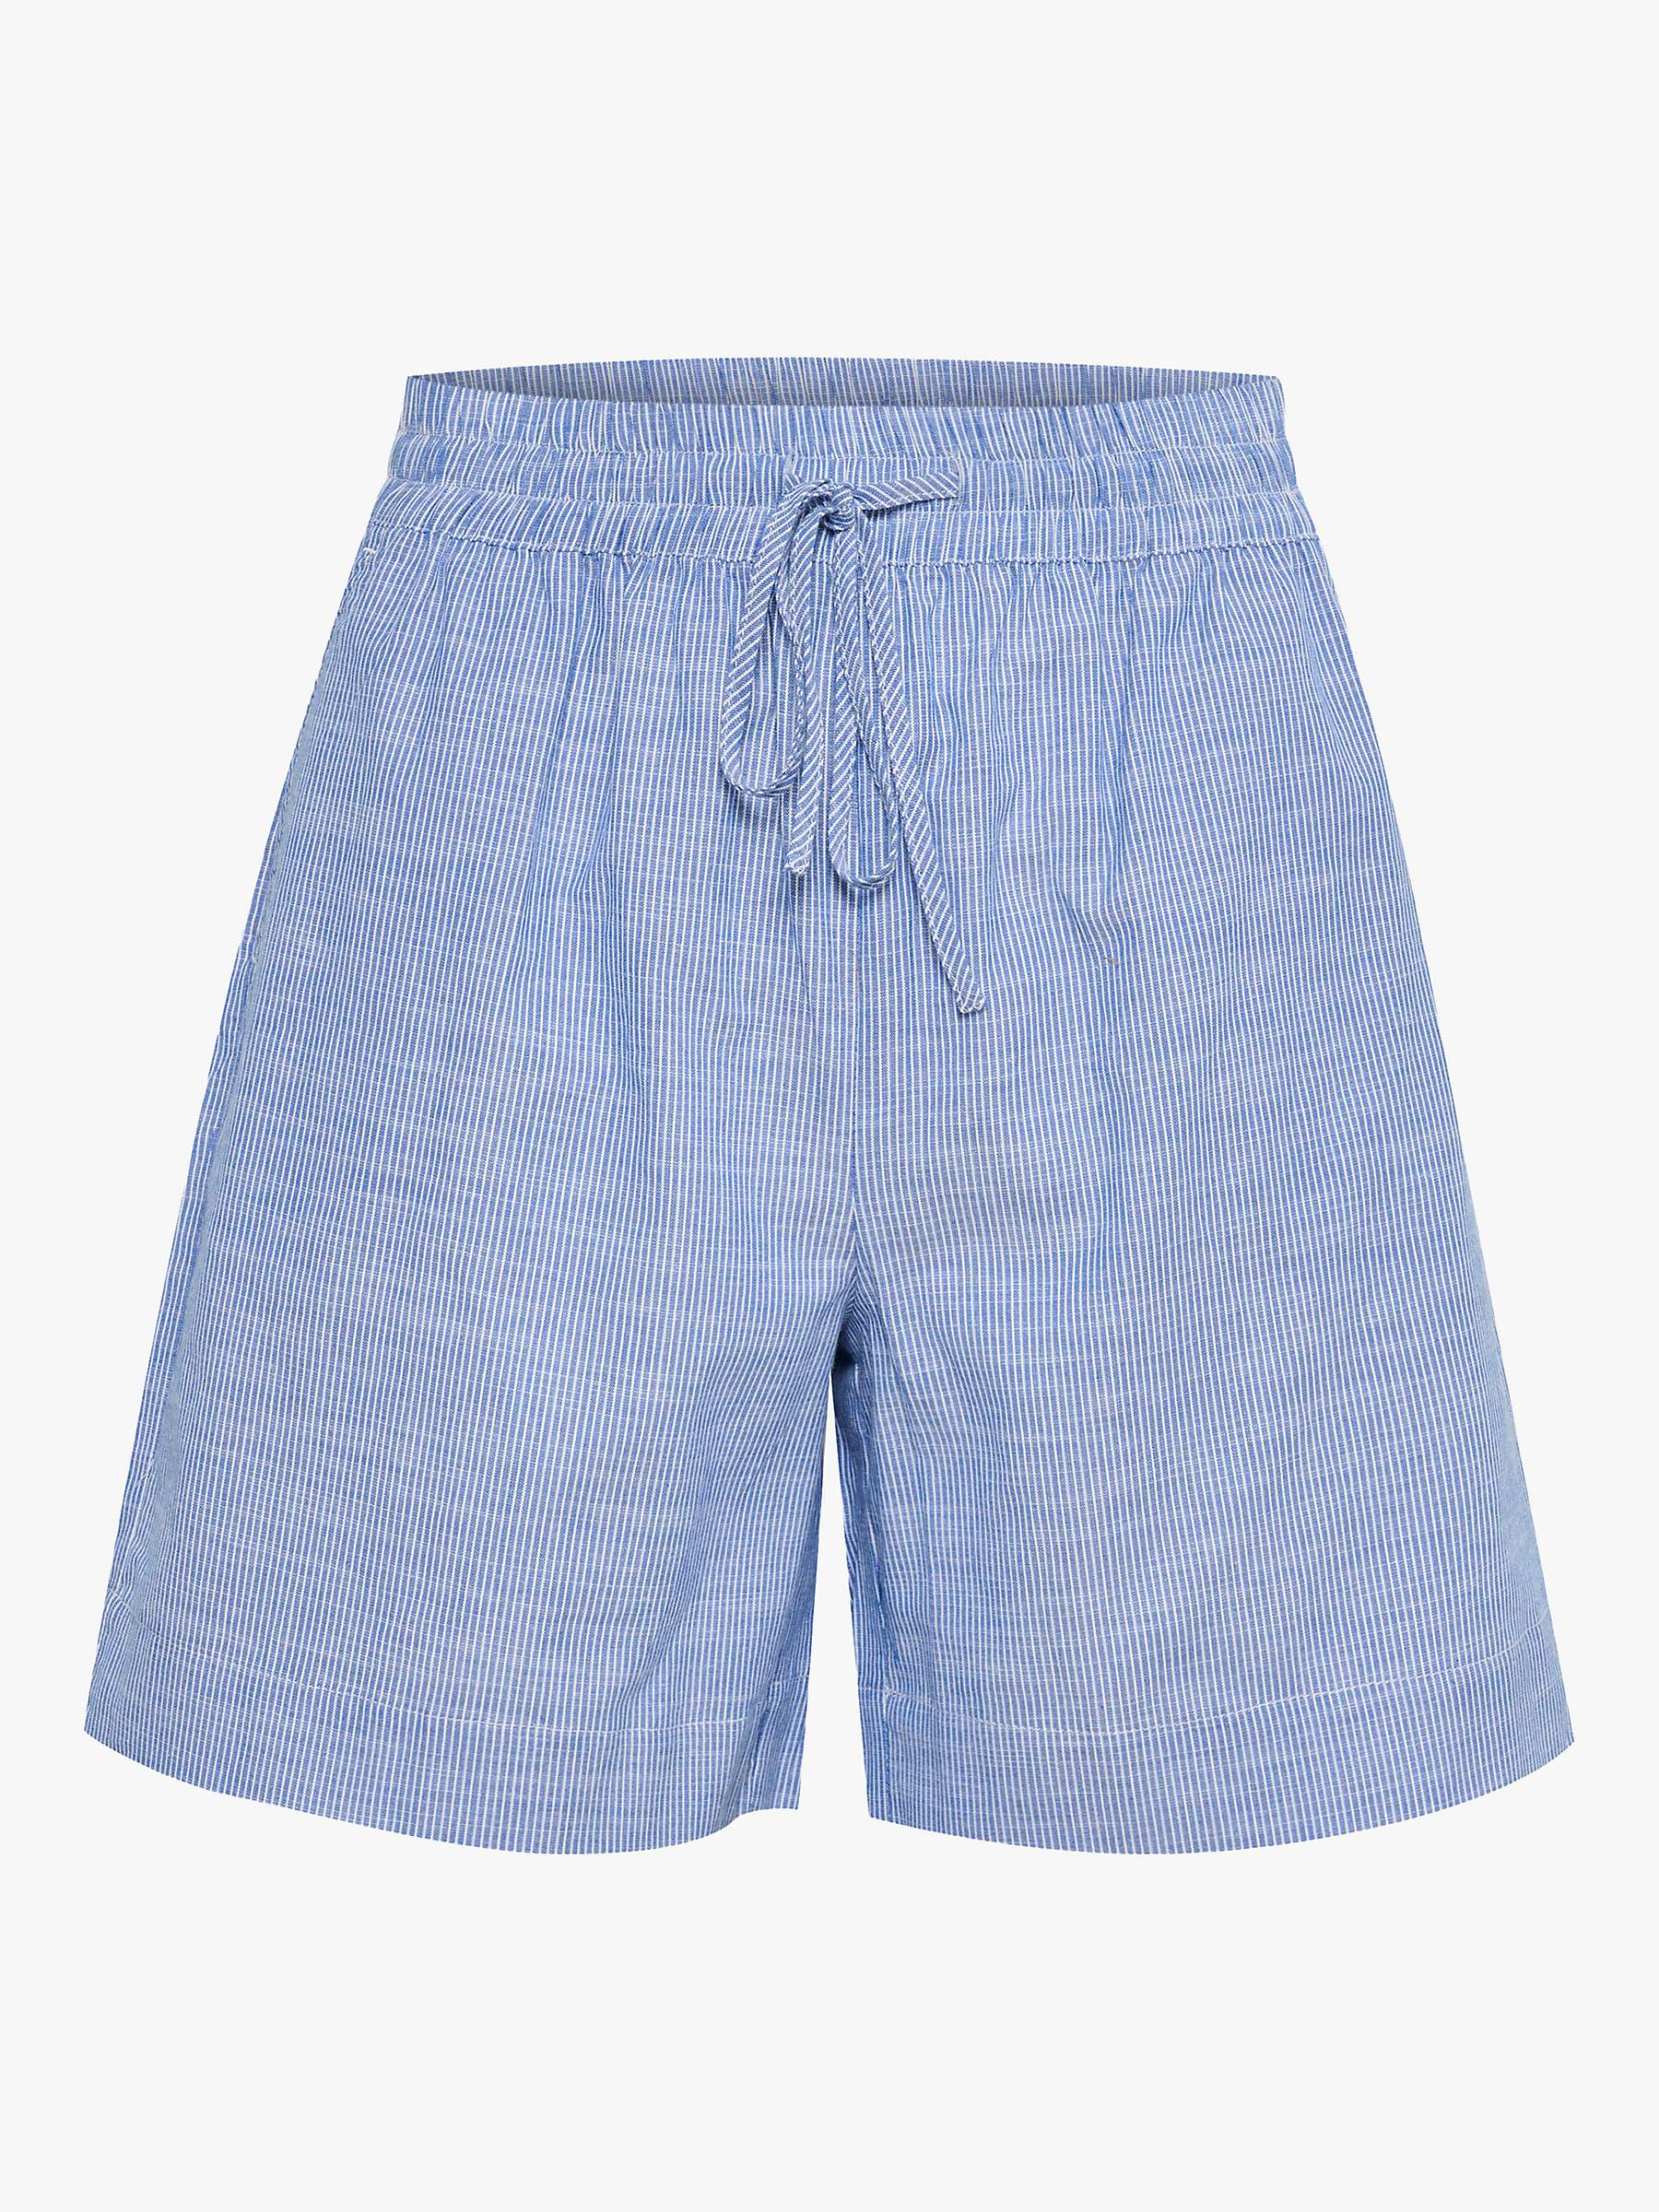 Buy MY ESSENTIAL WARDROBE Skye Stripe Cotton Shorts, Delft Blue Online at johnlewis.com